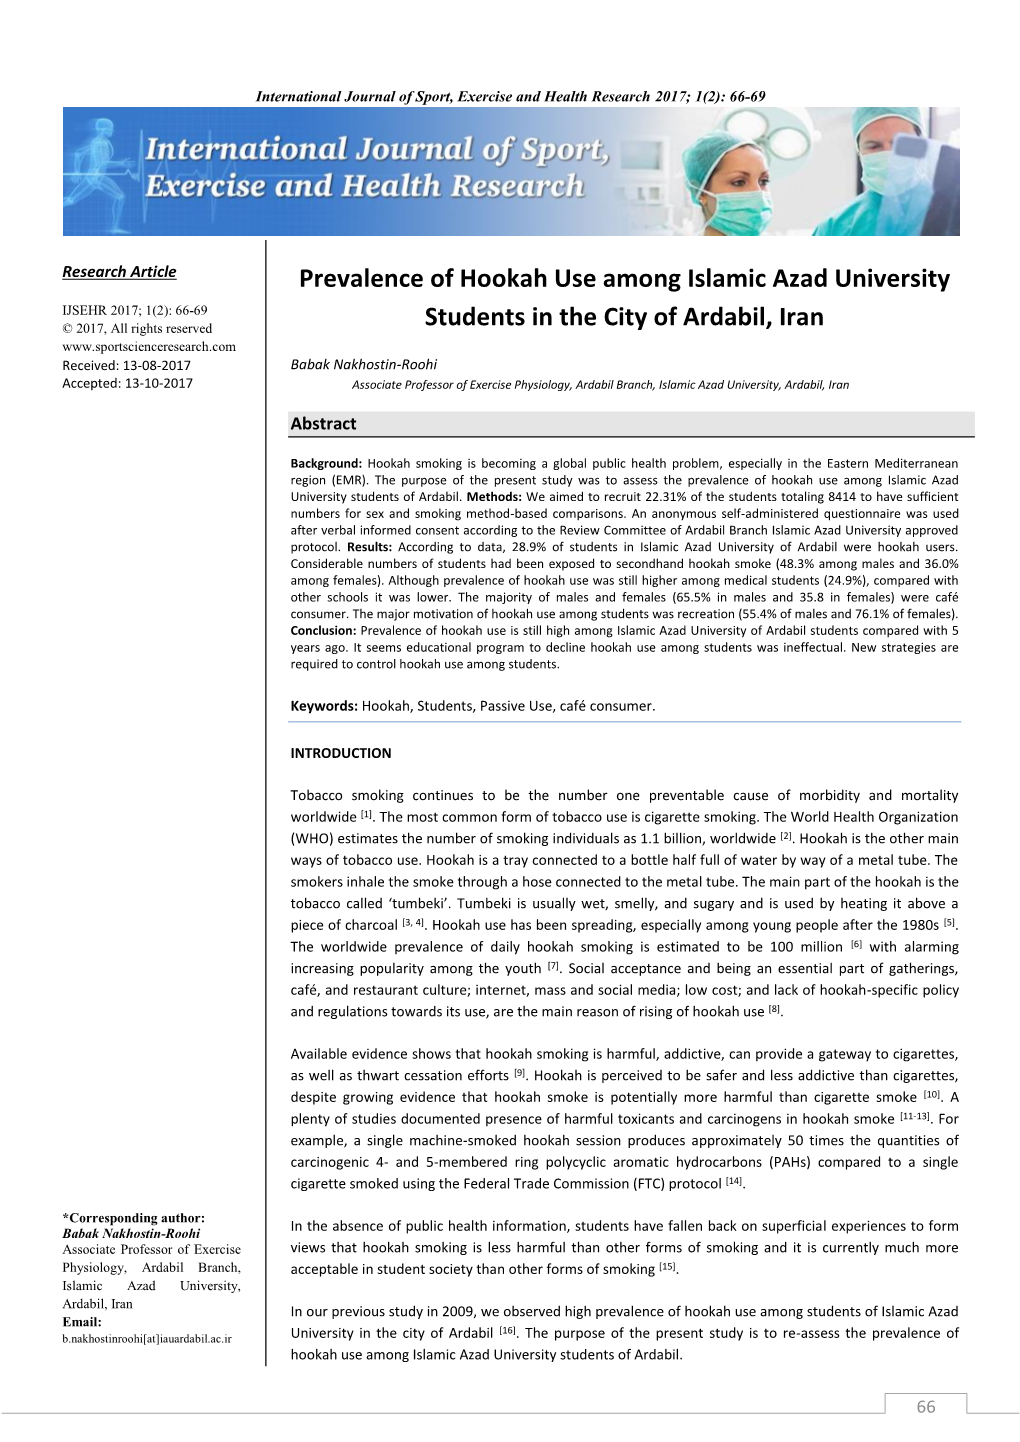 Prevalence of Hookah Use Among Islamic Azad University Students In